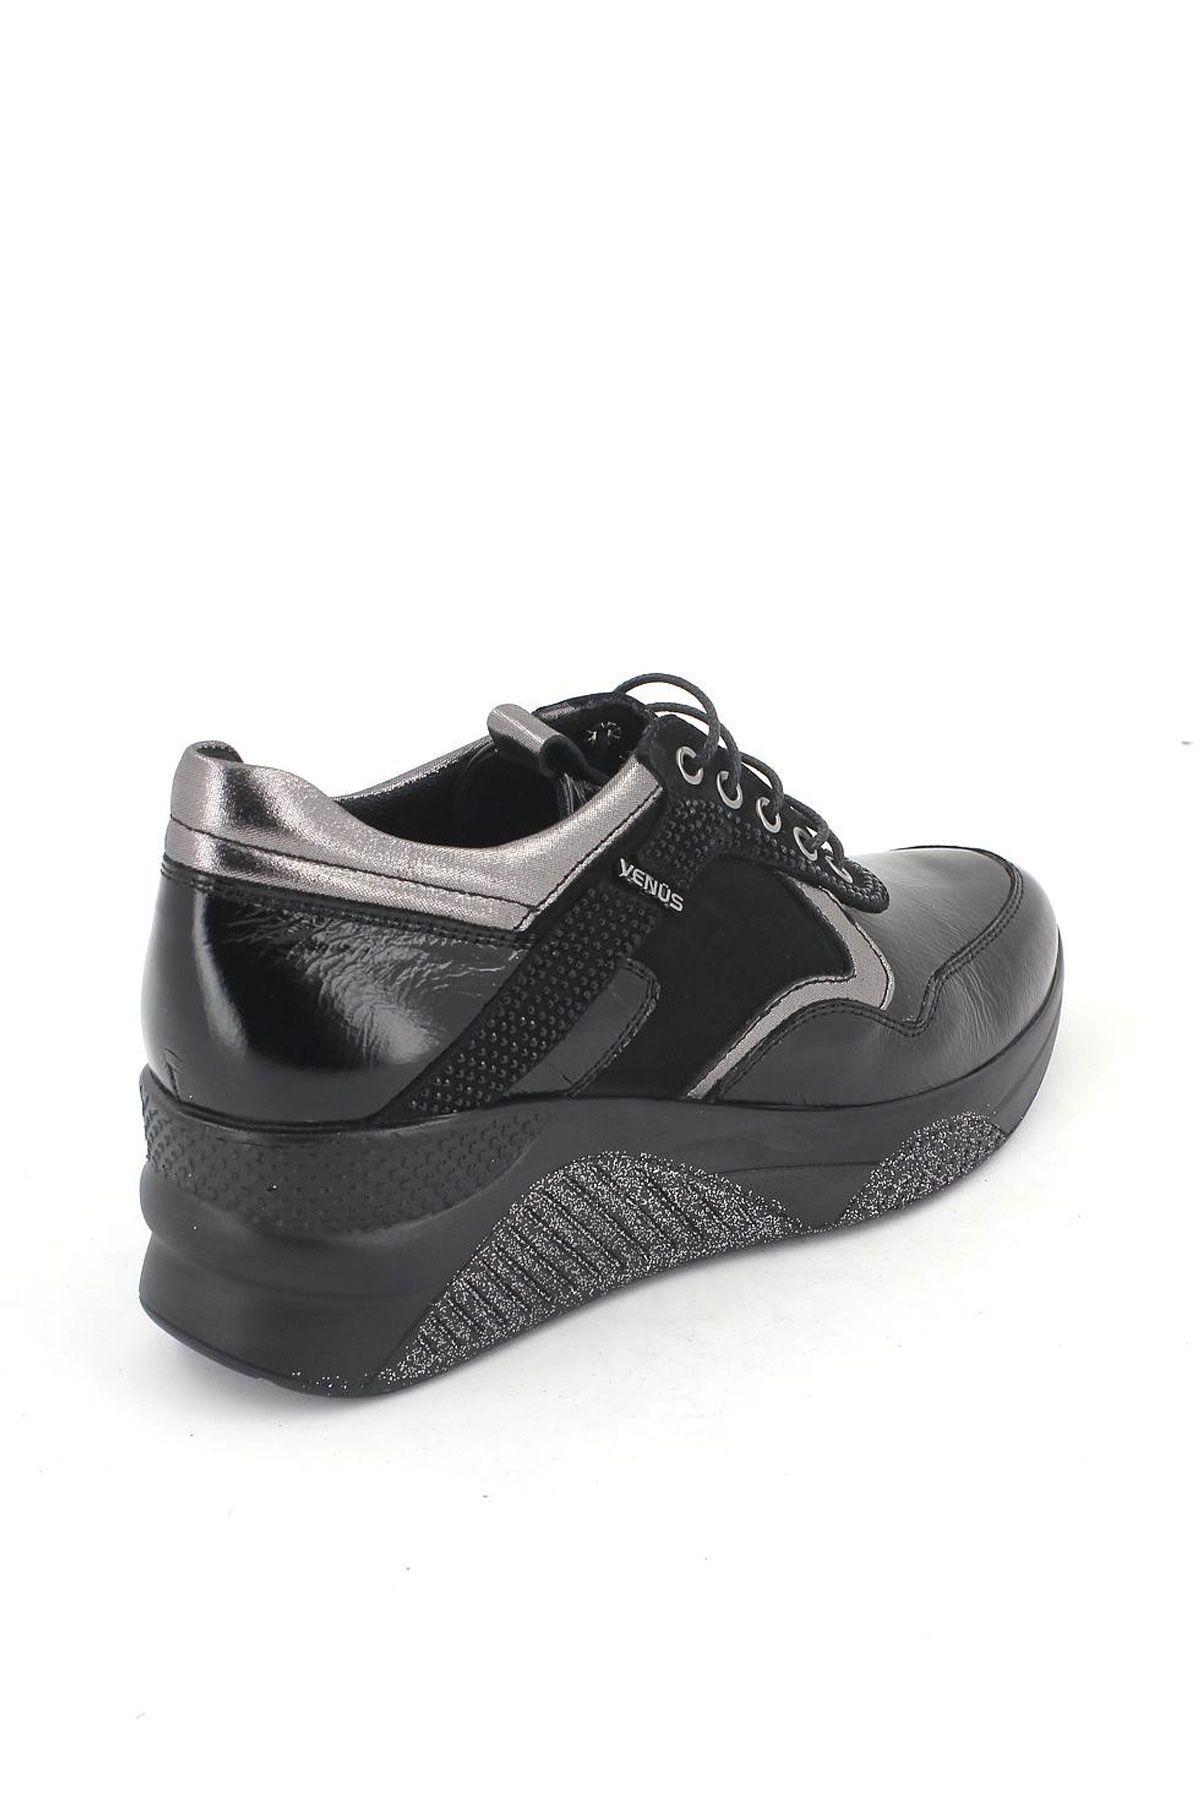 Kadın Extralight Deri Sneakers Siyah 1856070K